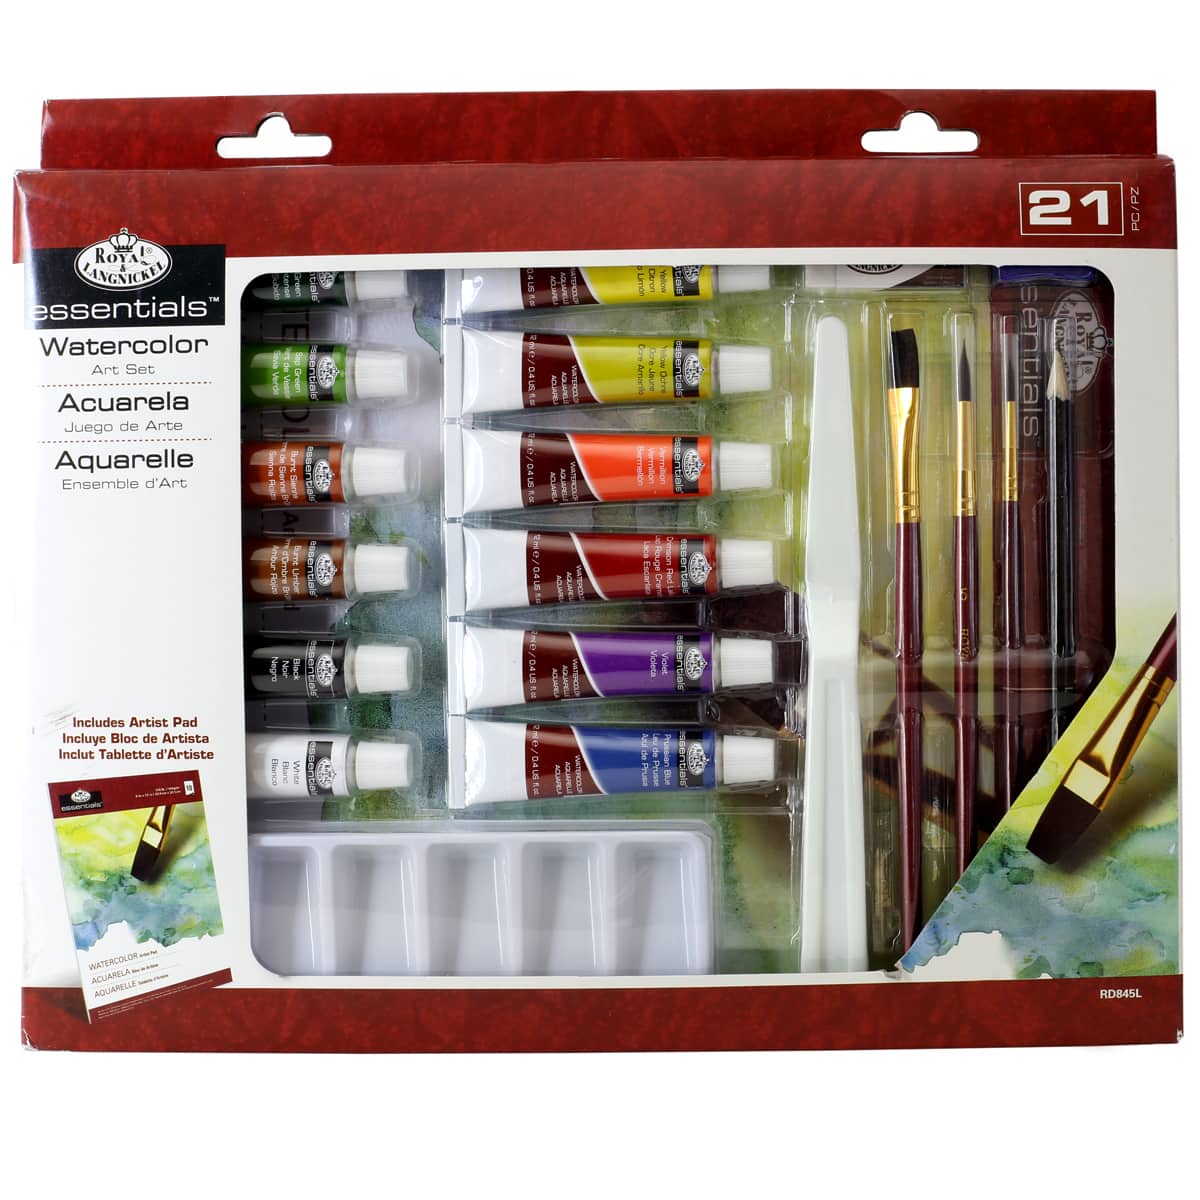 Royal & Langnickel® Essentials™ Watercolor Art Set